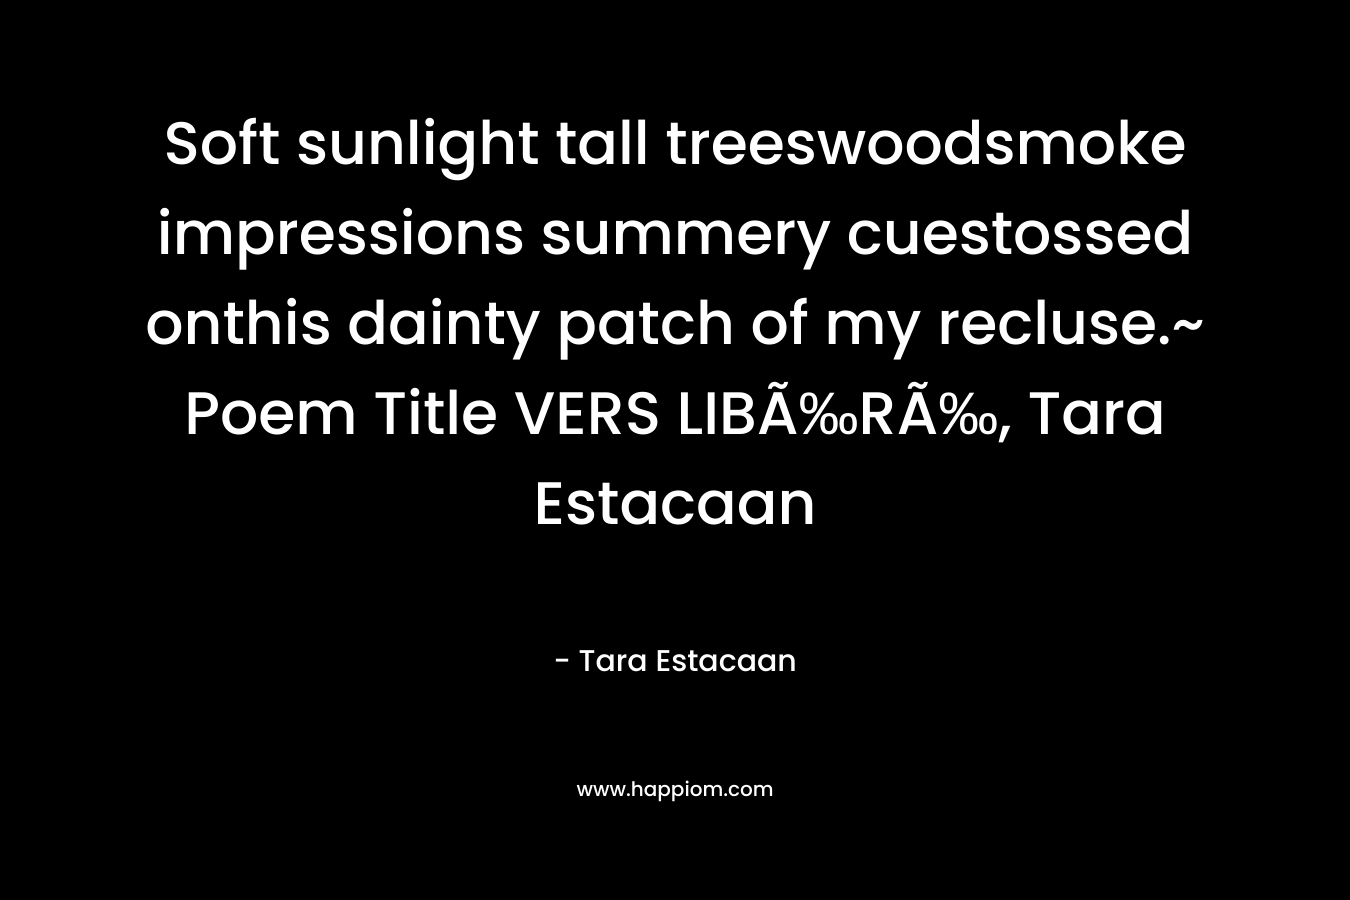 Soft sunlight tall treeswoodsmoke impressions summery cuestossed onthis dainty patch of my recluse.~ Poem Title VERS LIBÃ‰RÃ‰, Tara Estacaan – Tara Estacaan